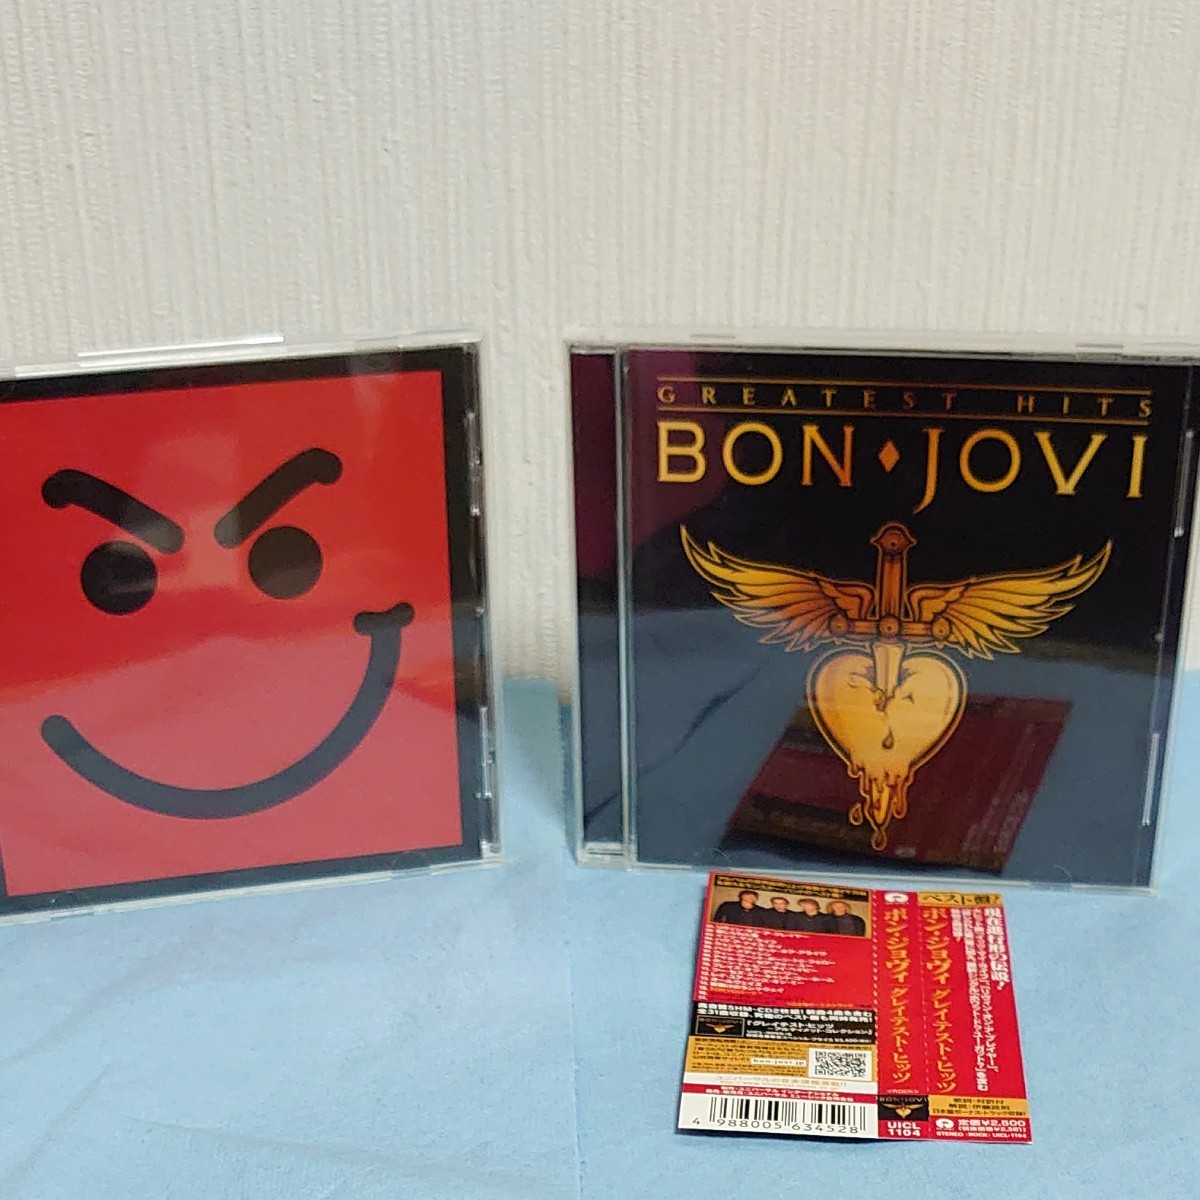 BON JOVI Have A Nice Day , GREATEST HITS 2CD